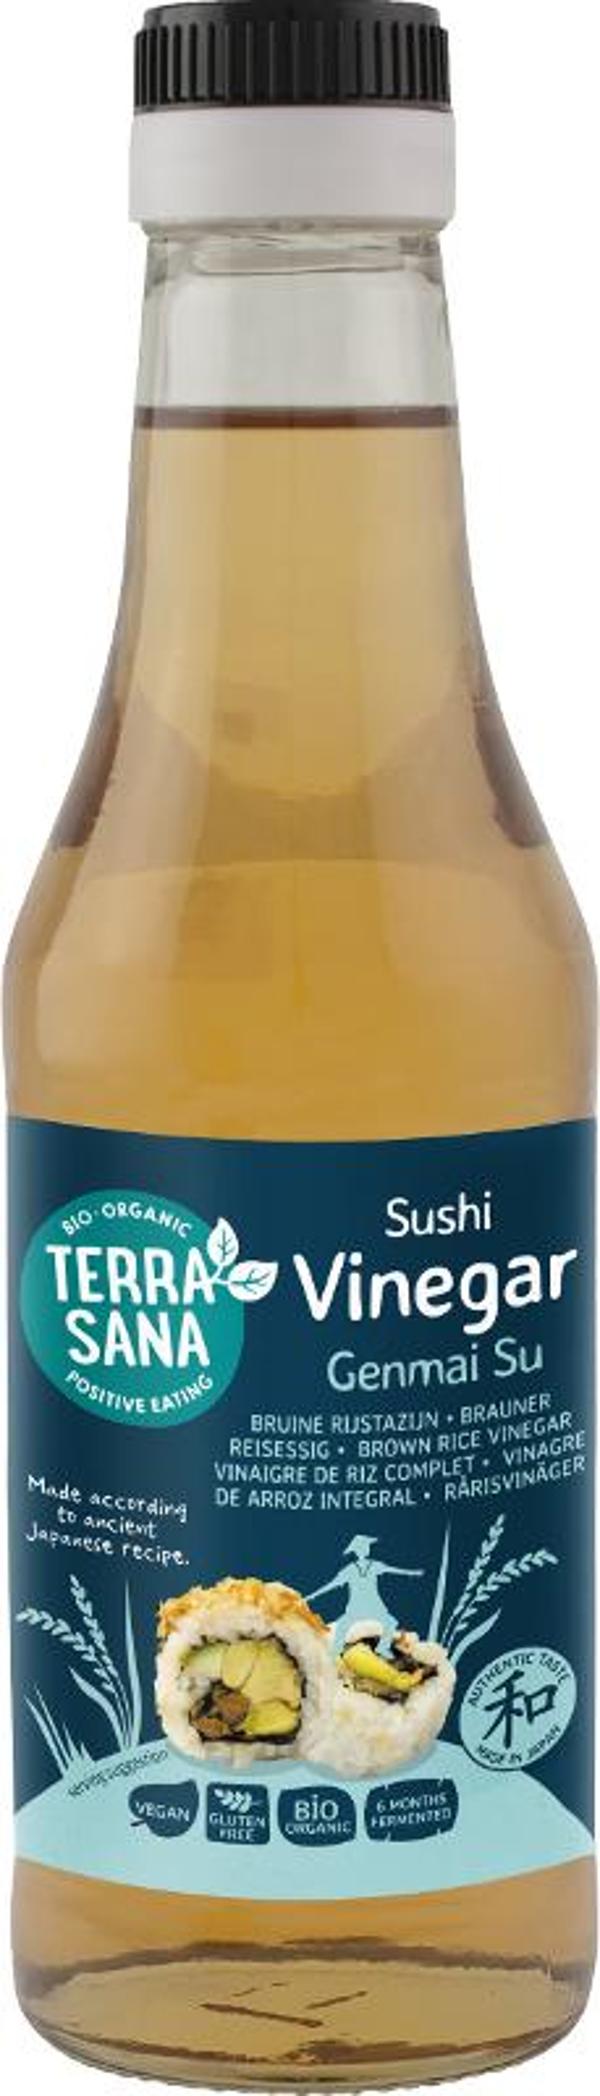 Produktfoto zu Sushi Essig 250ml Terra Sana